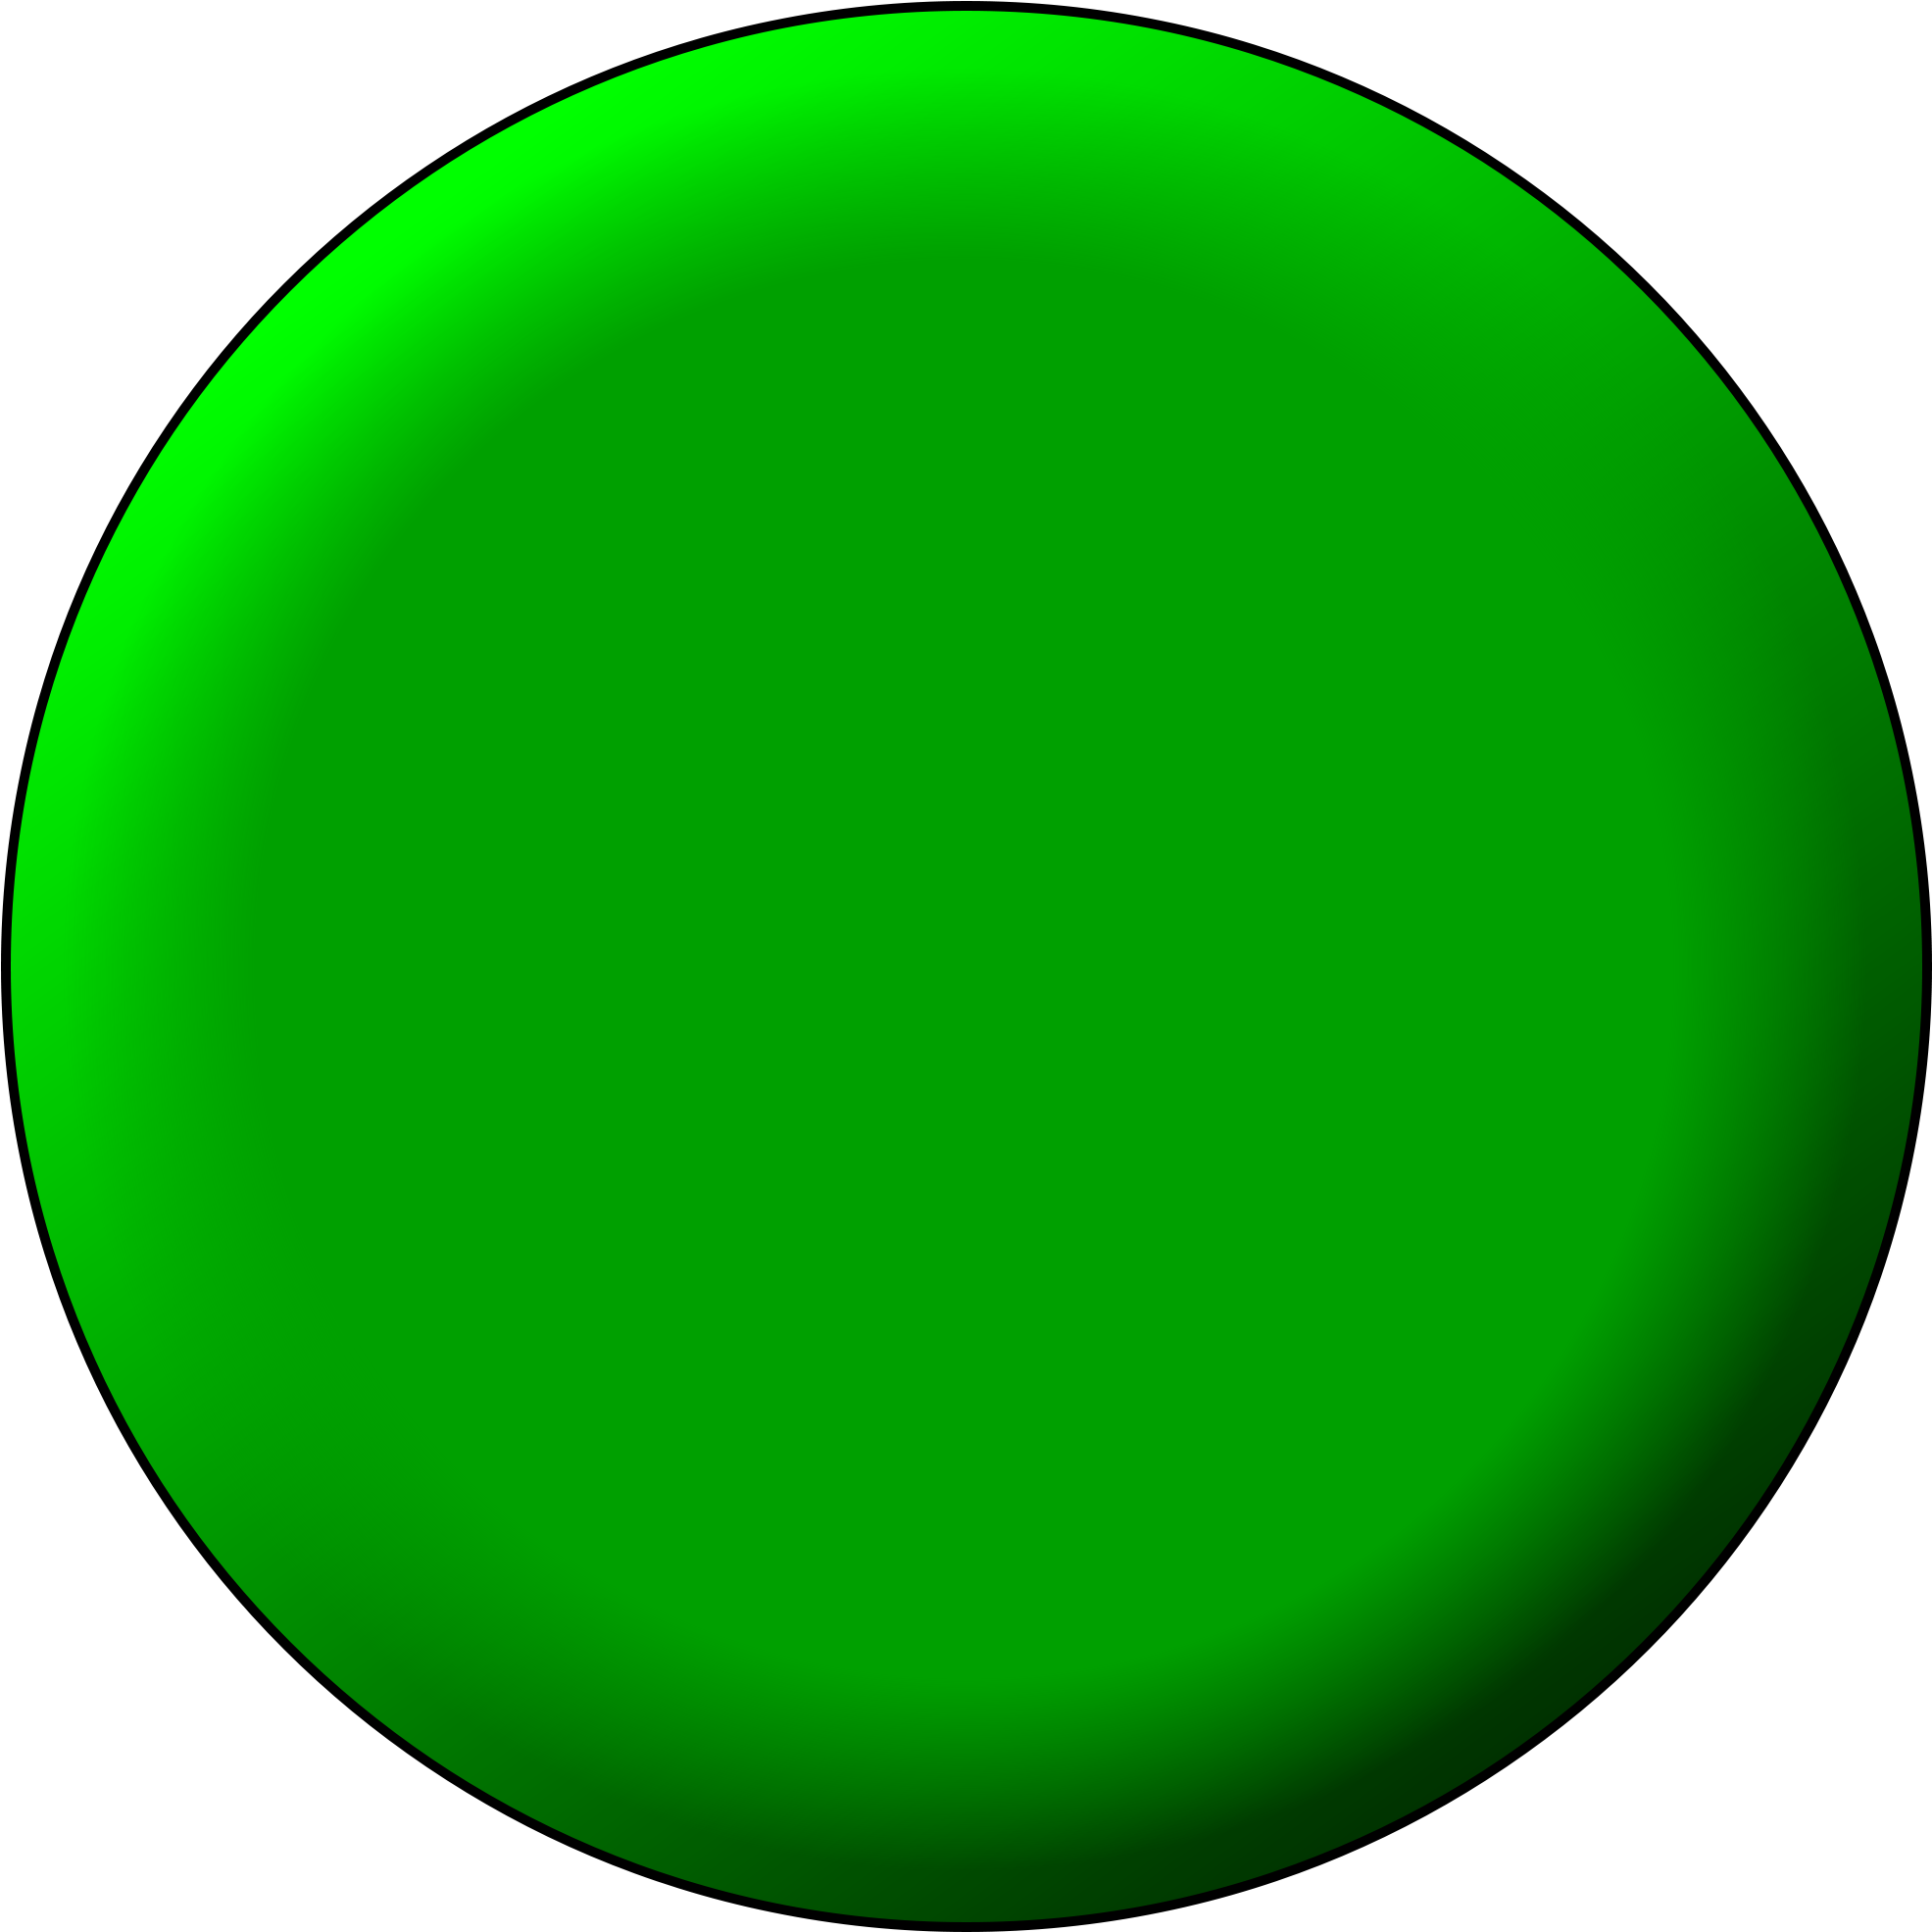 Кружочки без звука. Зеленый круг. Зеленый кружок. Зеленые кружочки. Круг зеленого цвета.